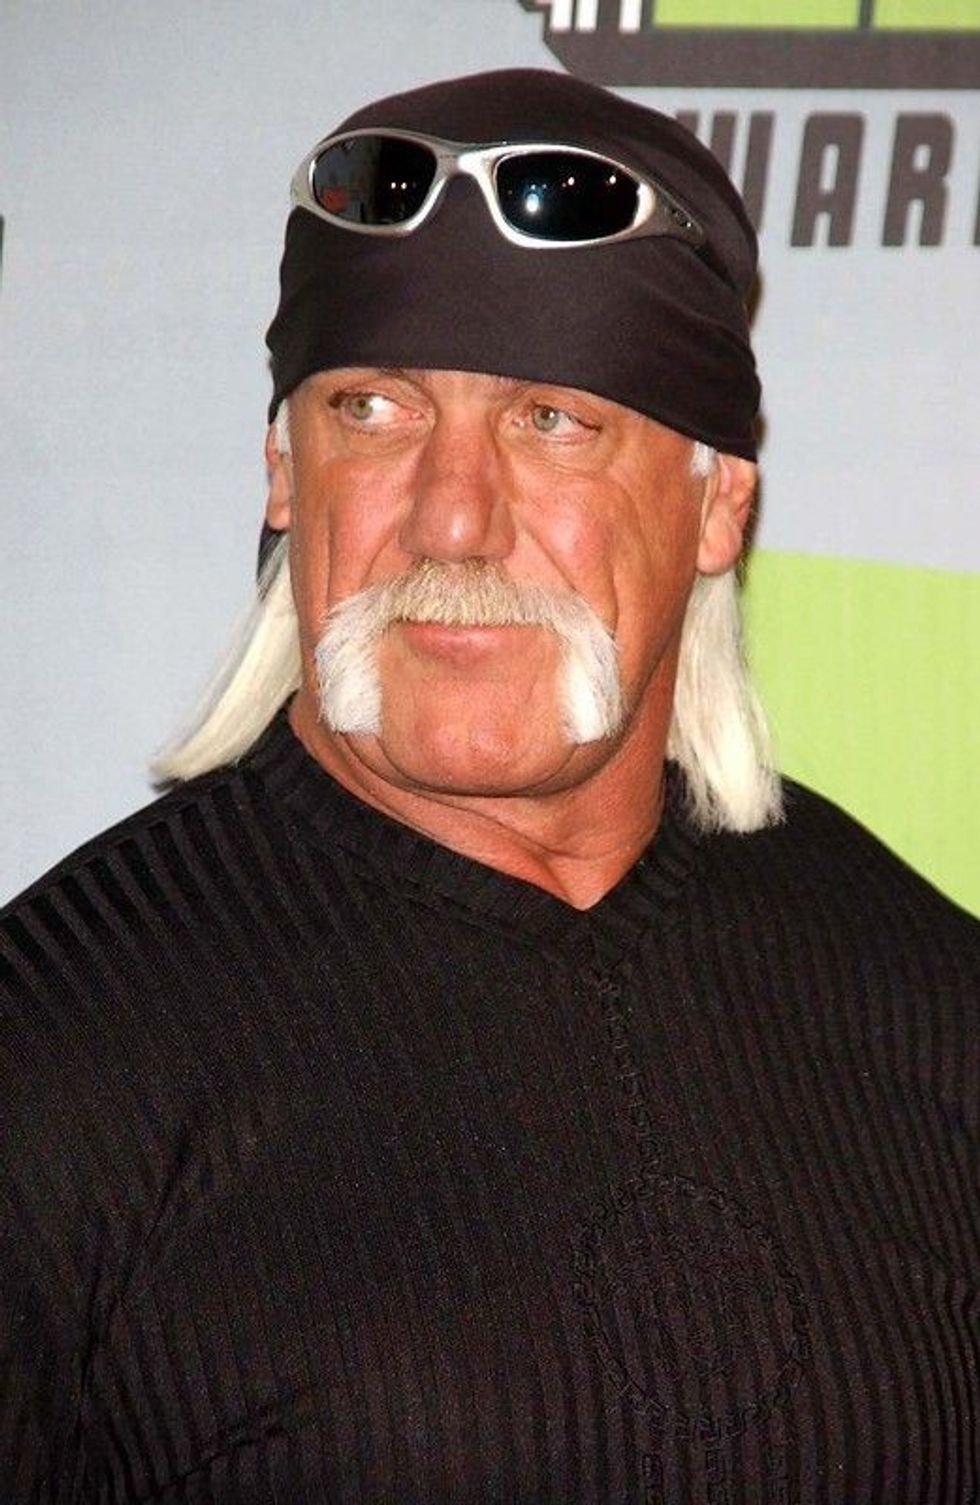 Hulk Hogan quotes will make you understand the man behind the wrestler.